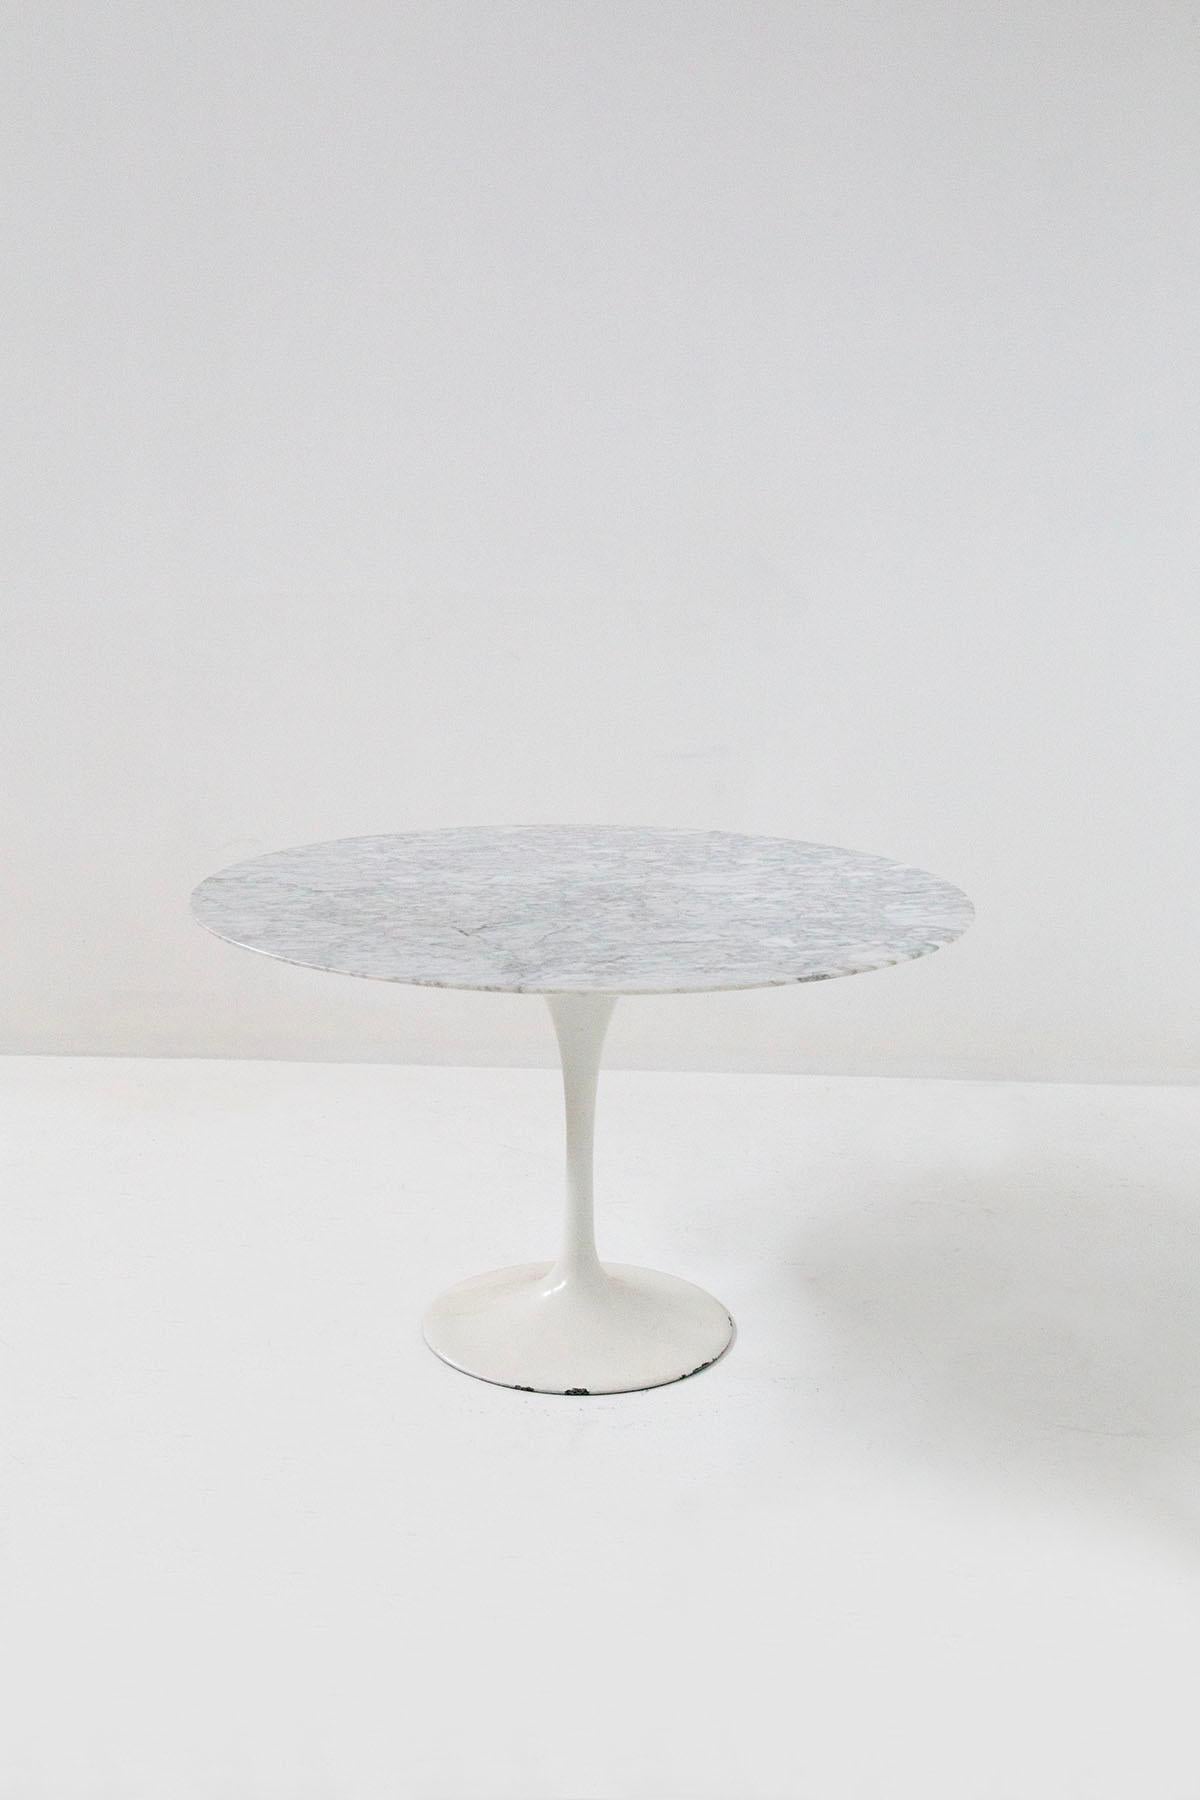 Eero Saarinen Round Table in White Marble For Sale 2